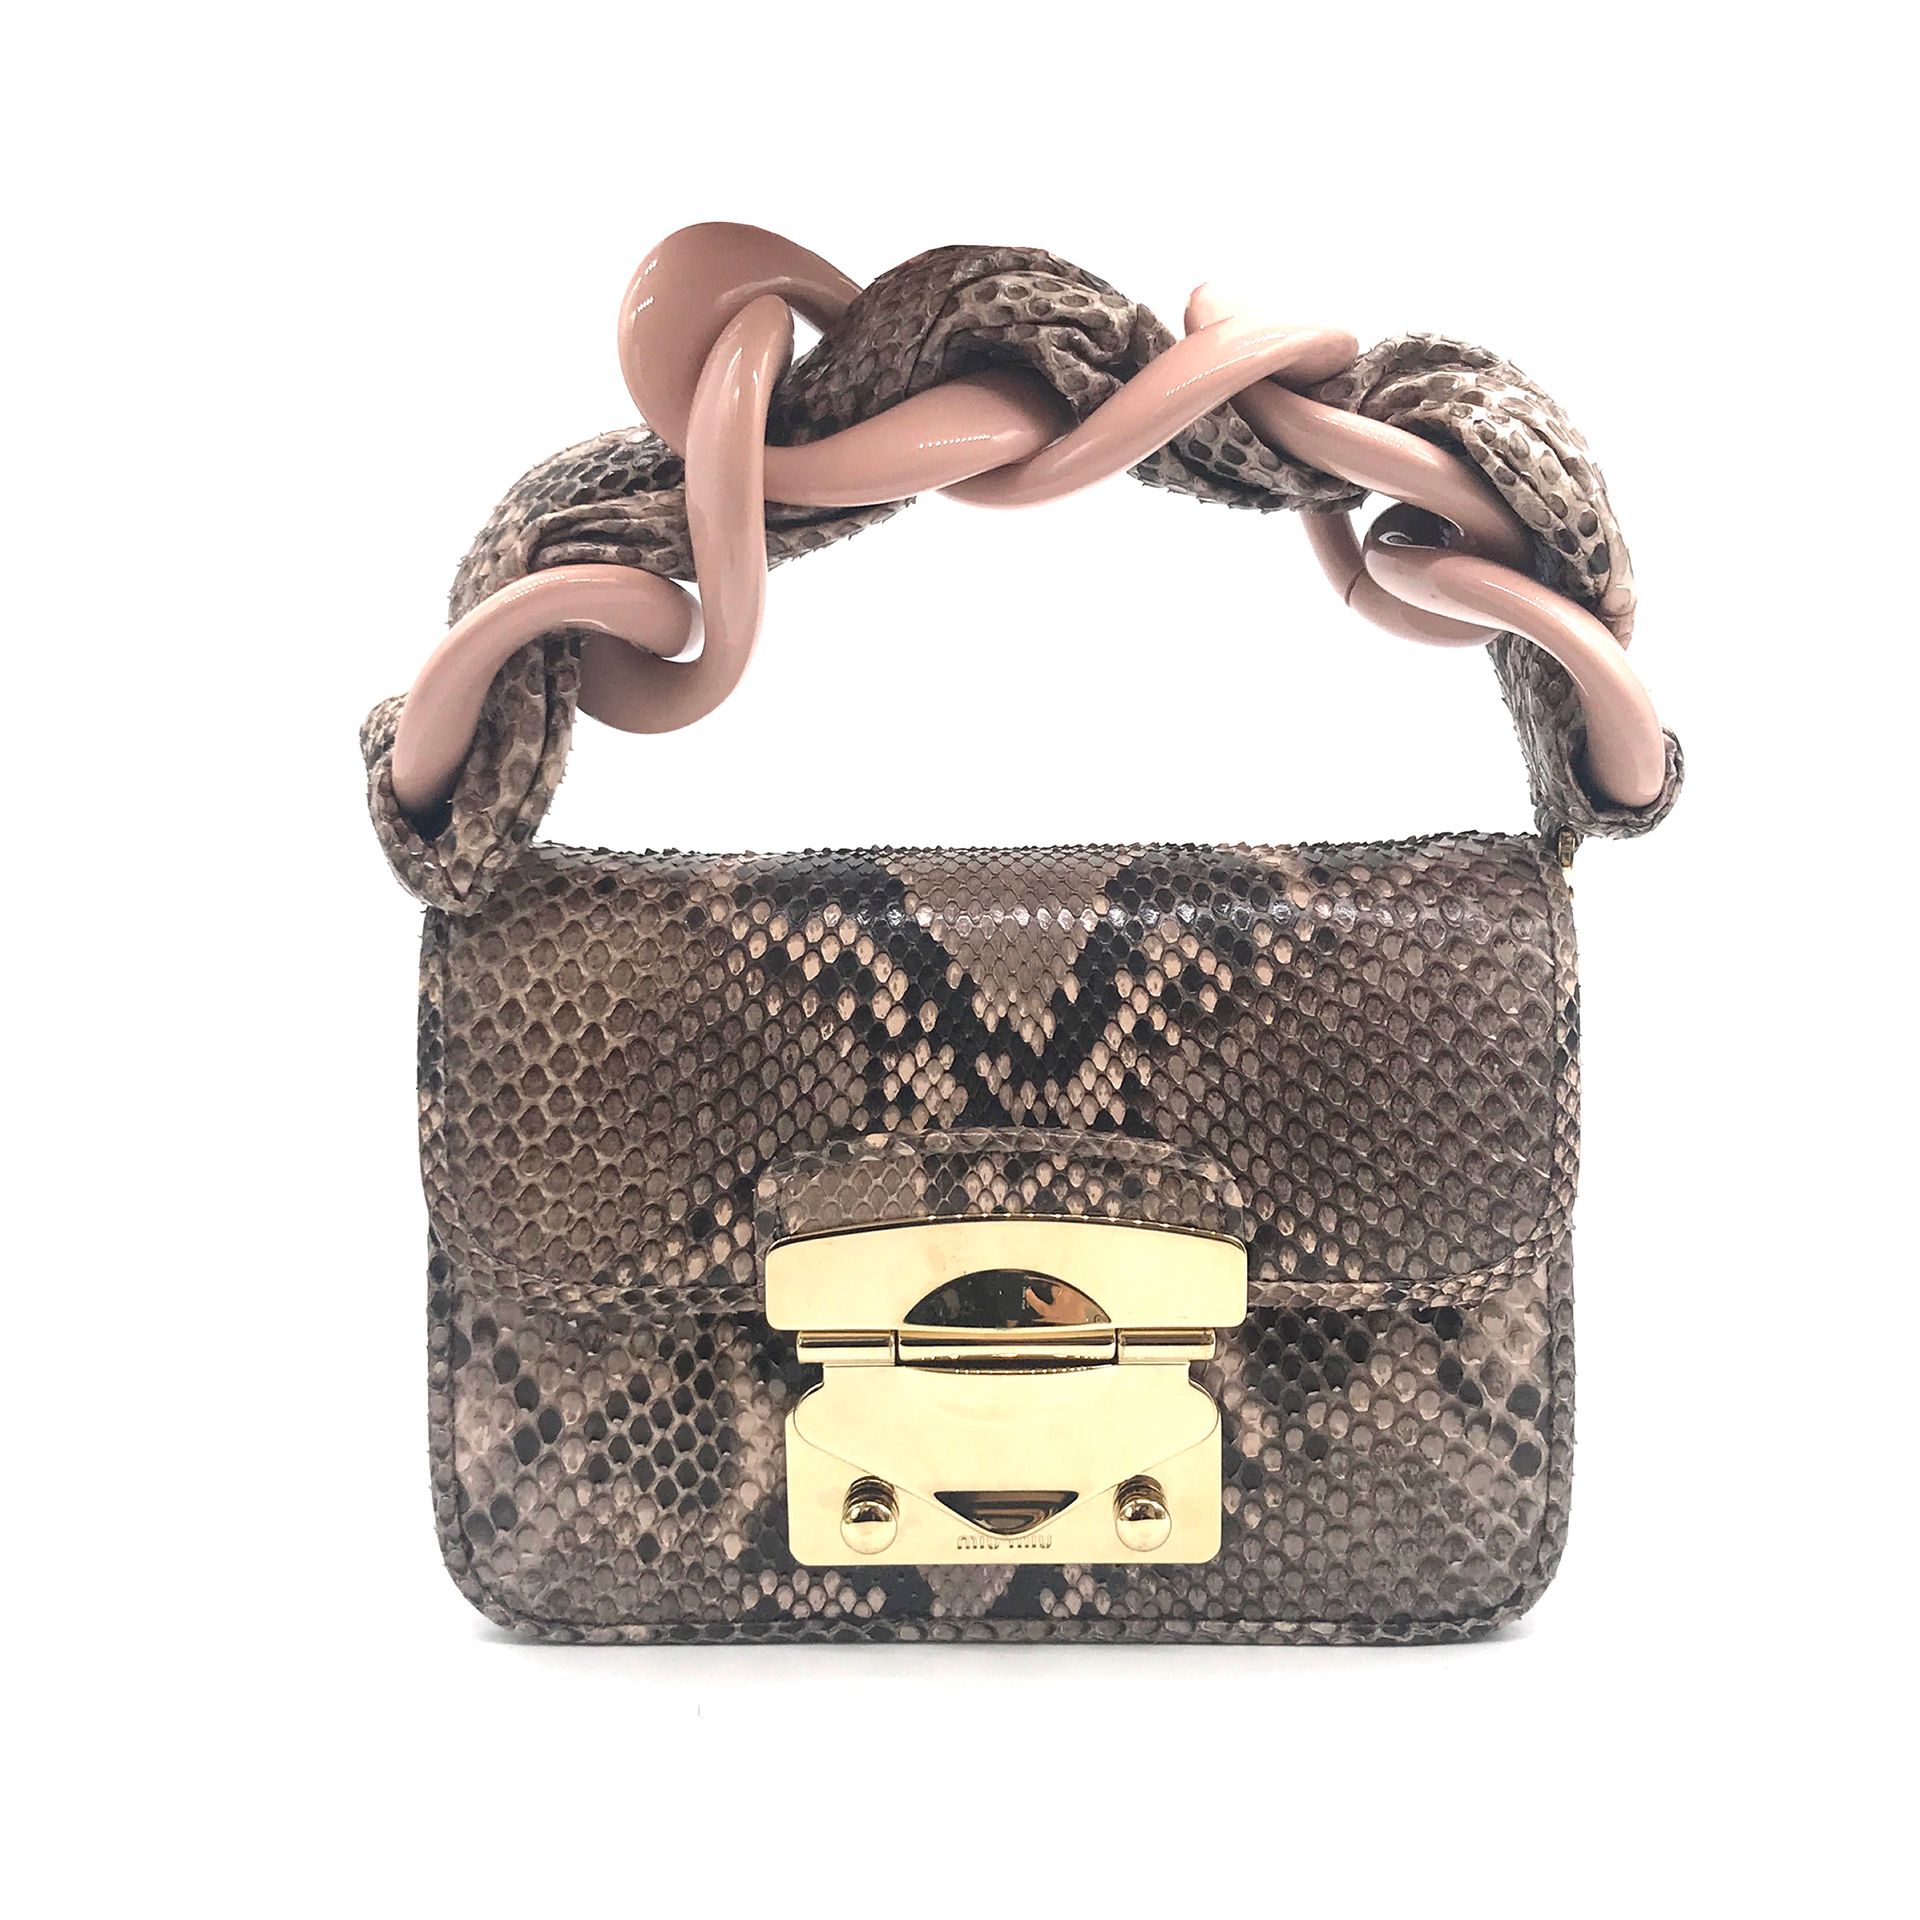 MIU MIU Small handbag in beige brown python, pink plex… | Drouot.com